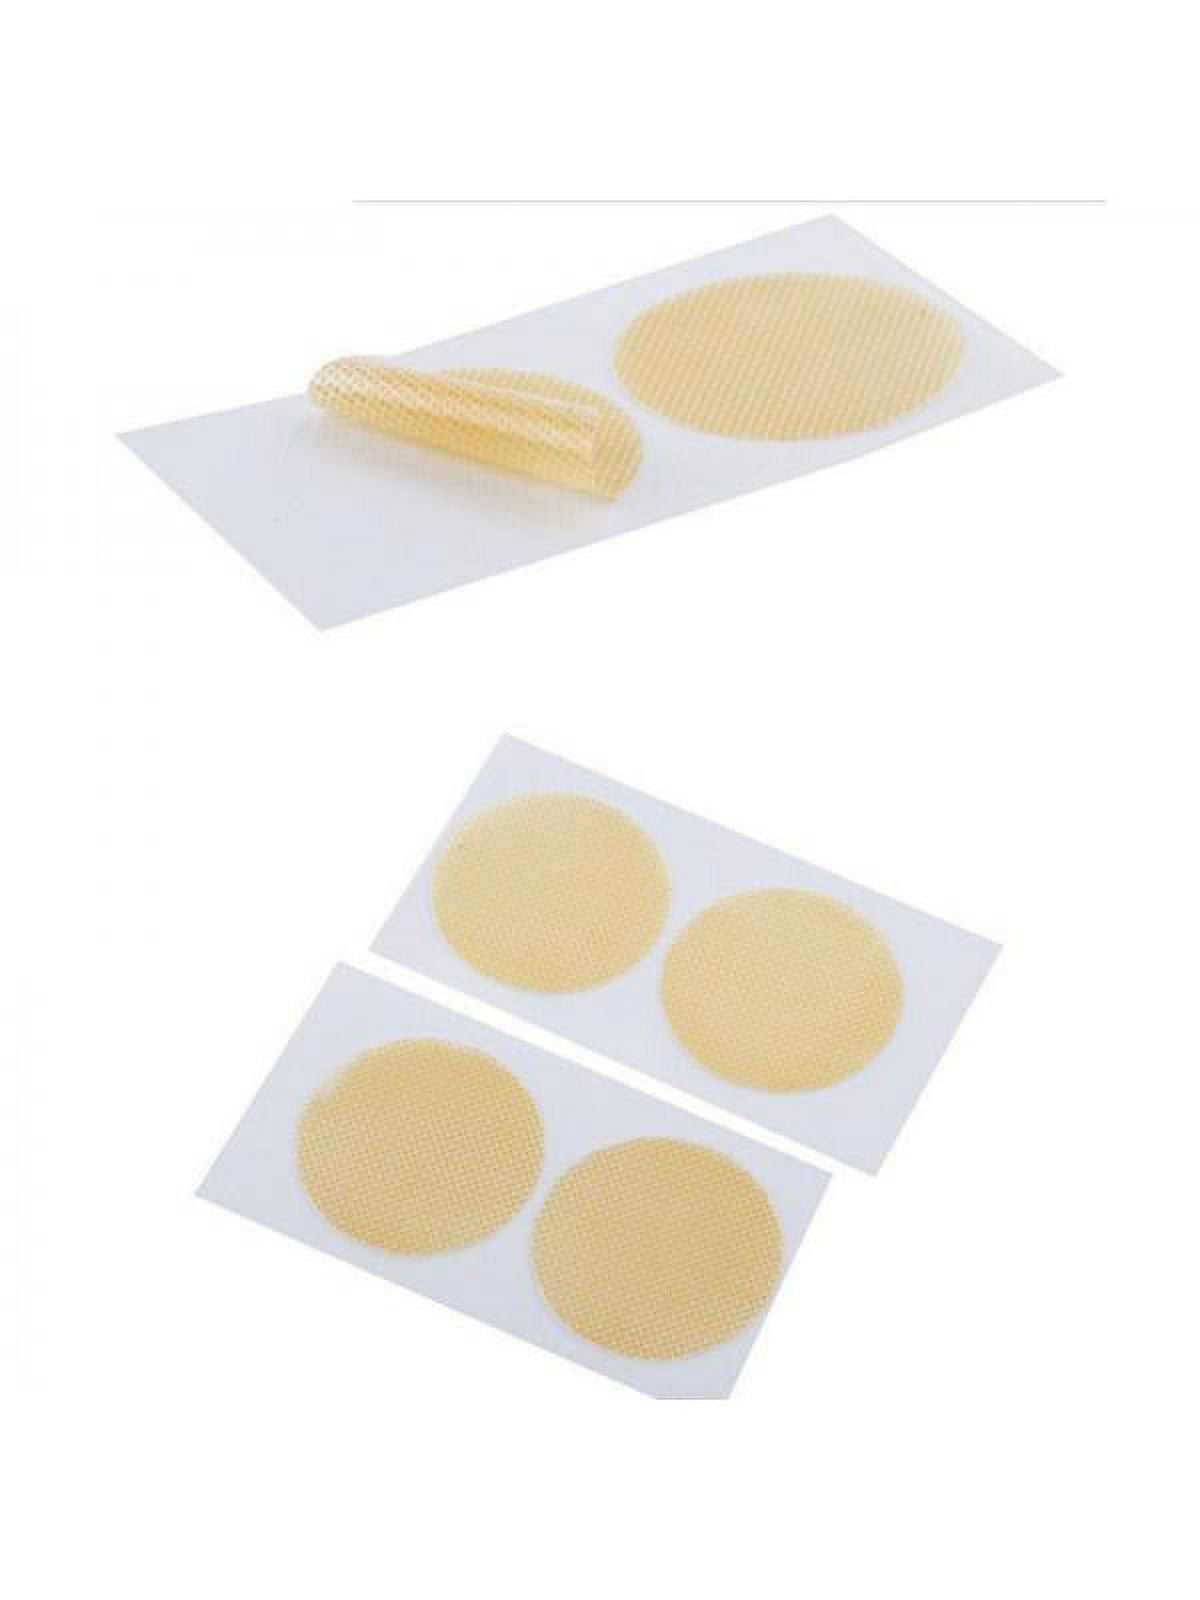 Non Adhesive Ultra Thin Silicone Nipple Pasties- Reusable Waterproof Women  Nipple Covers